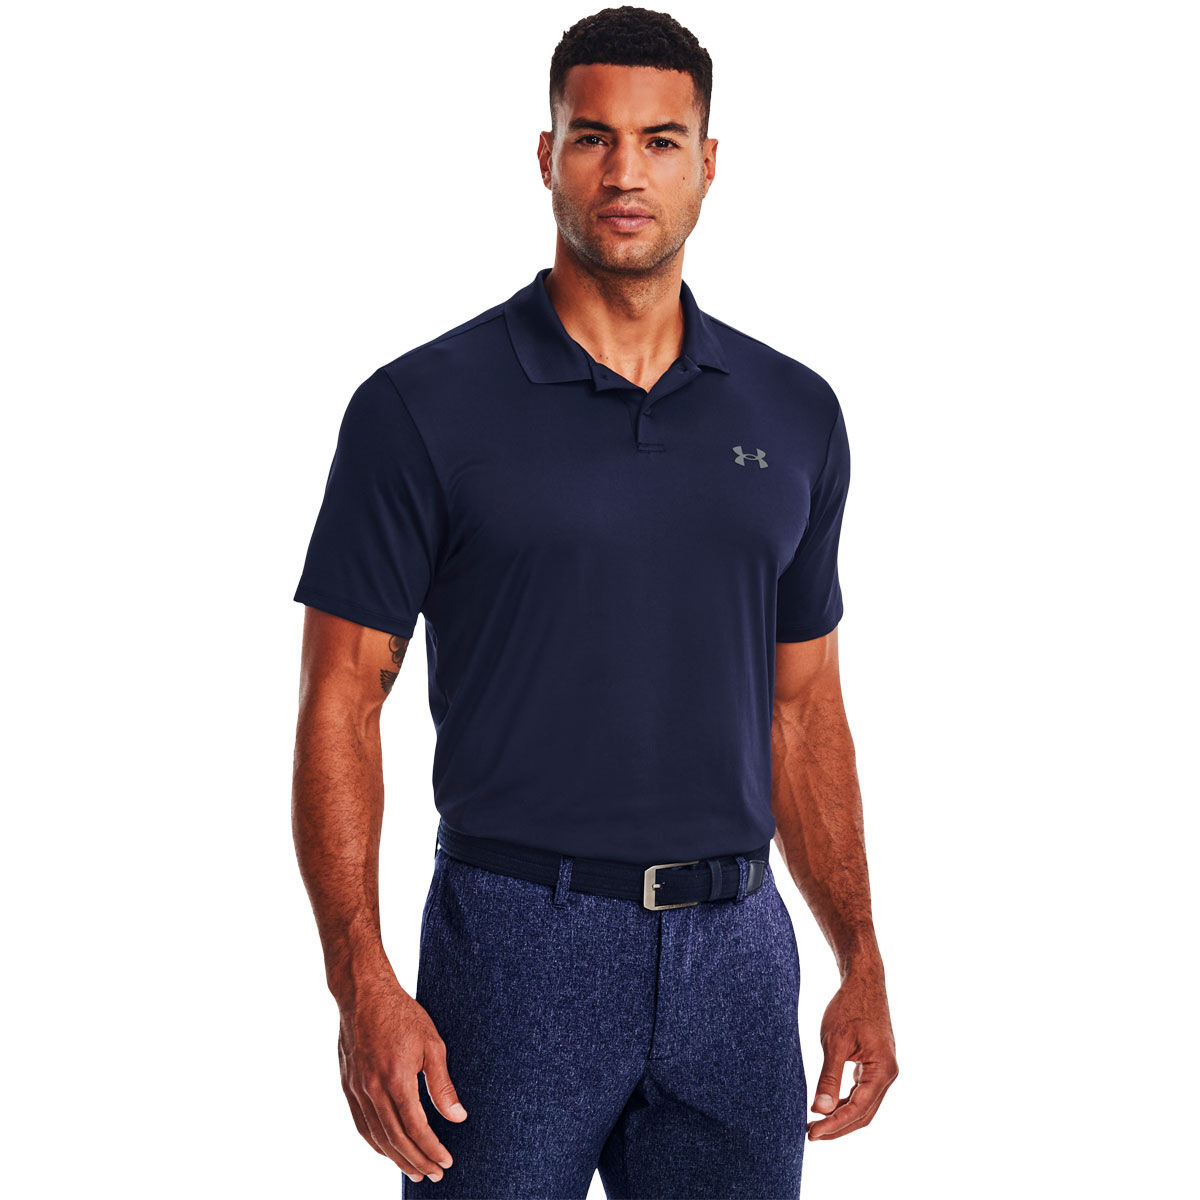 Nike, Shirts, Nike New York Yankees Blue Golf Polo Shirt